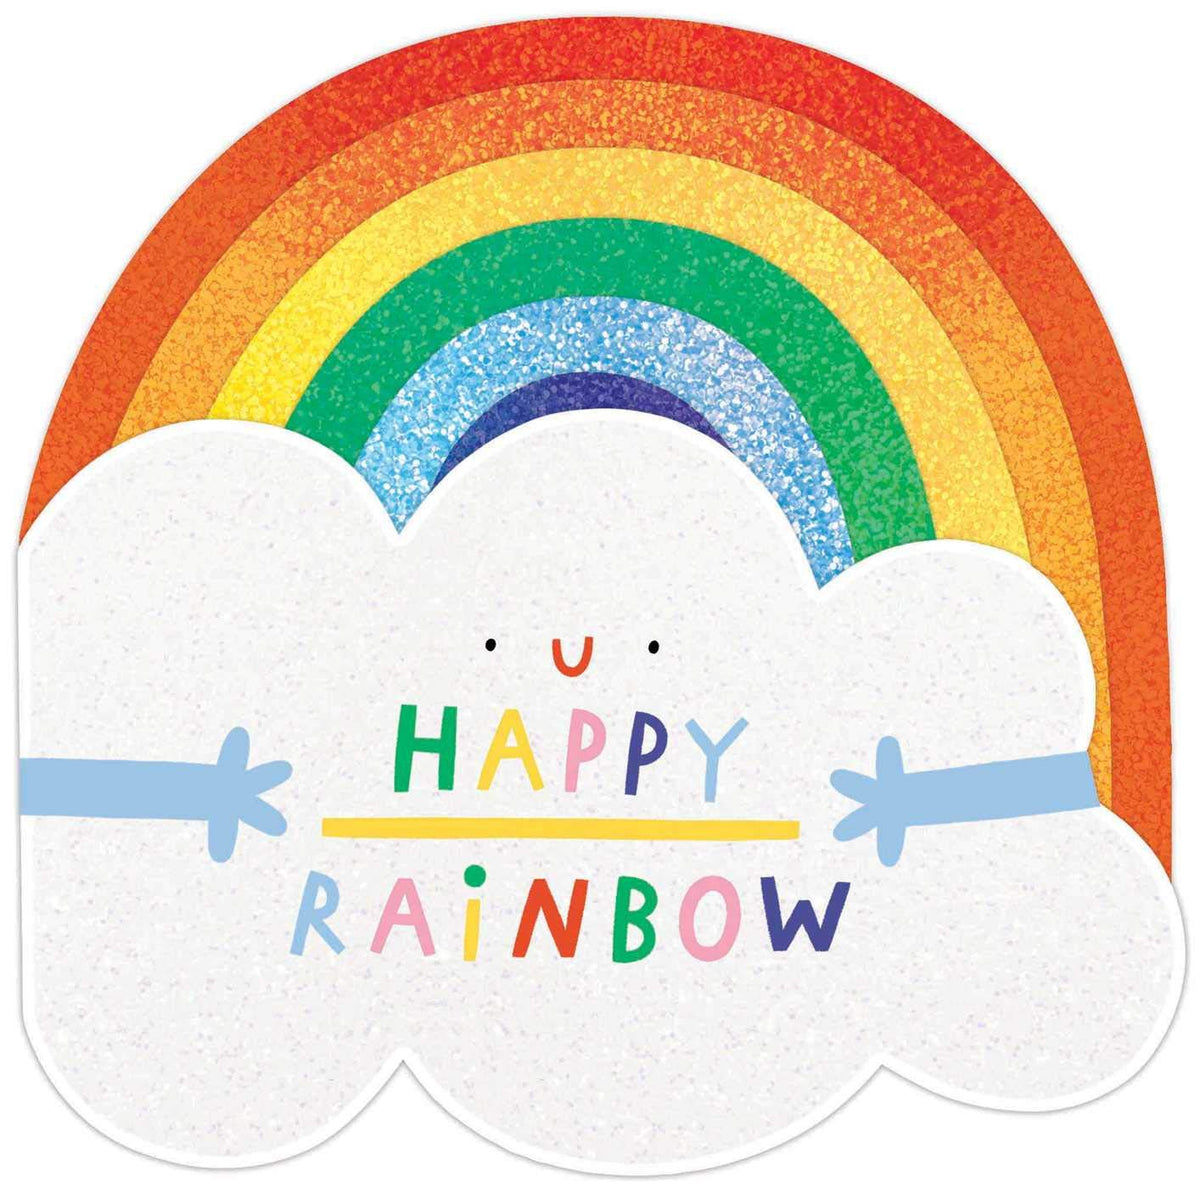 Happy Rainbow By Eliot Hammer